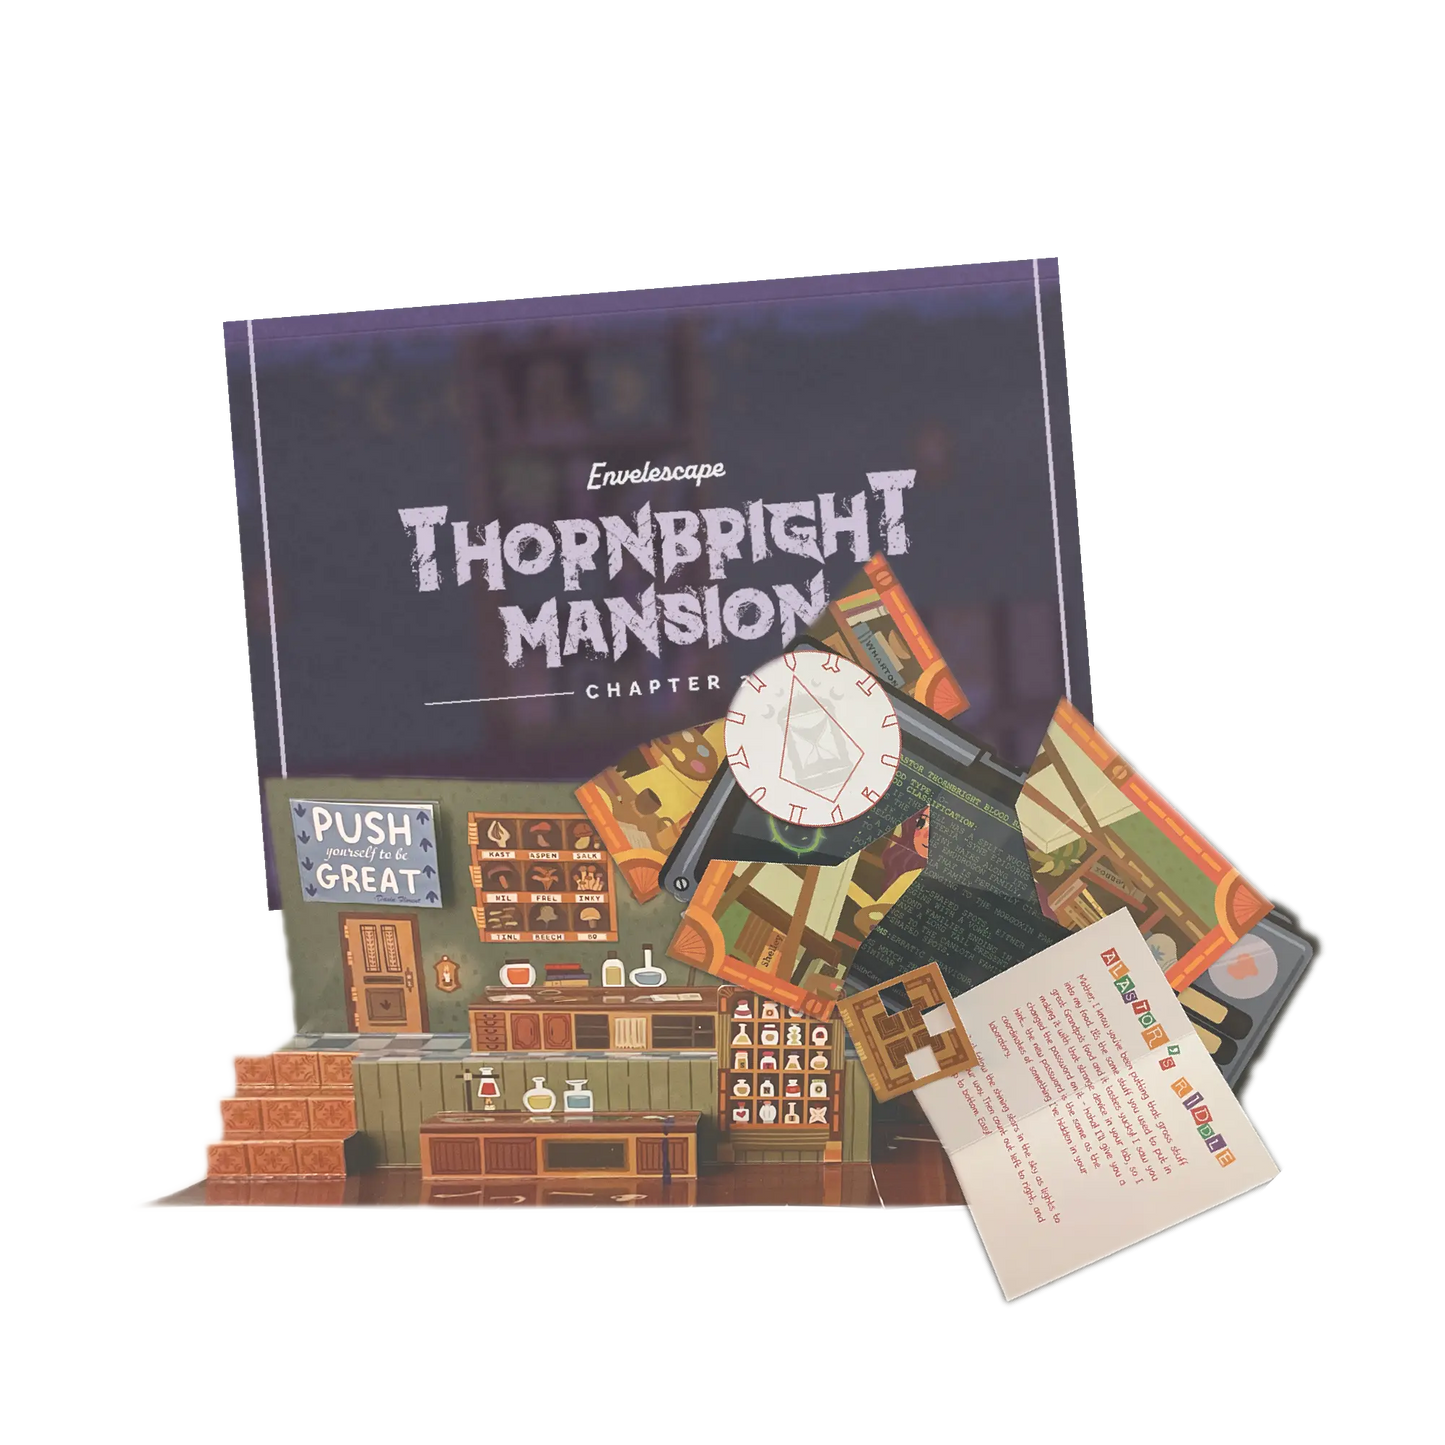 Thornbright Mansion: Chapter 2 Envelescape